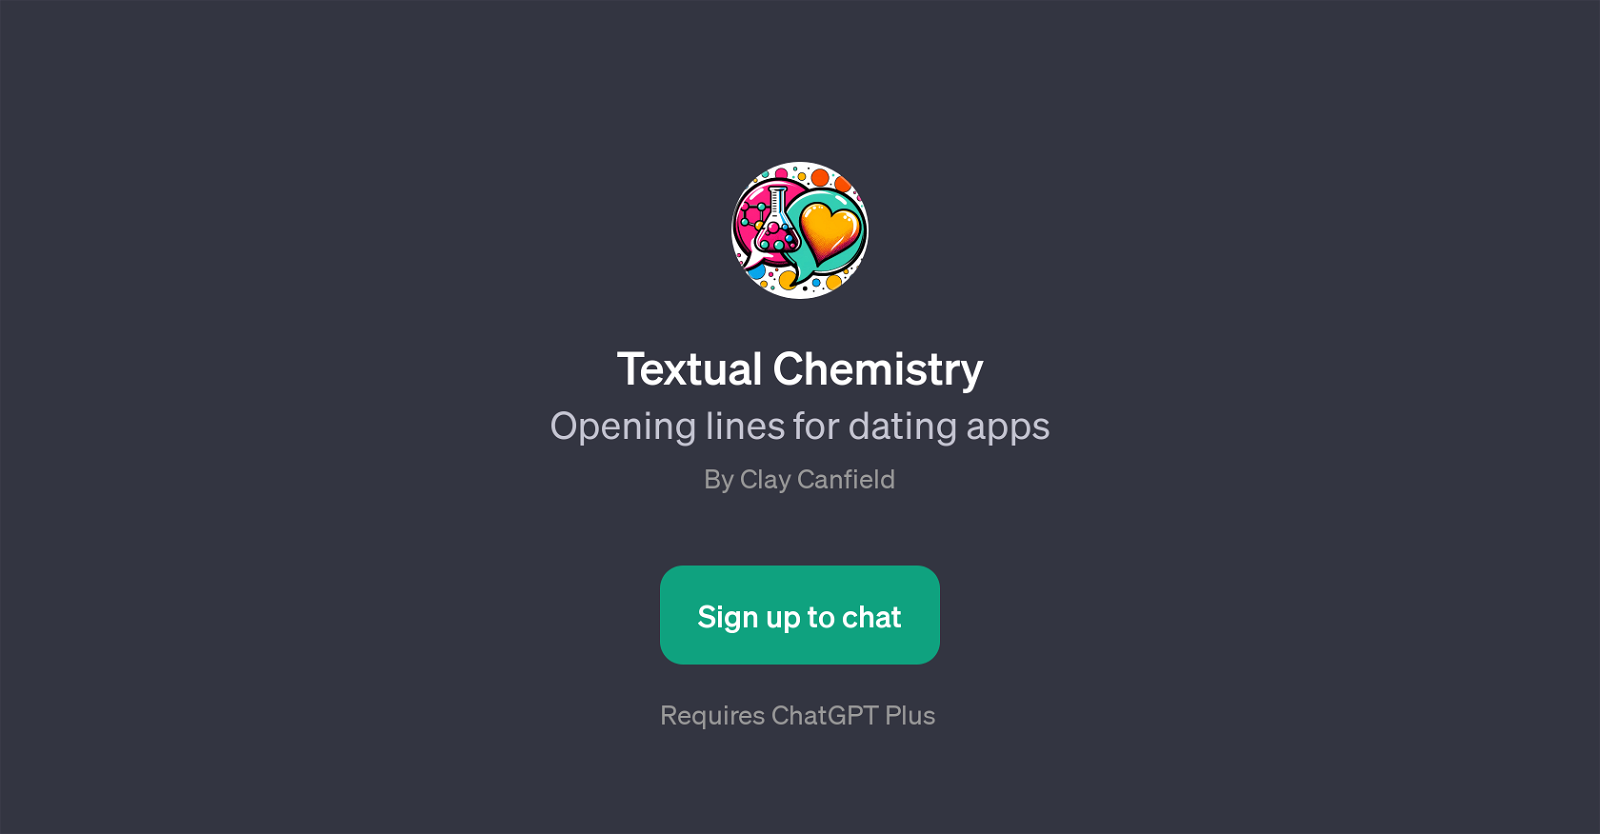 Textual Chemistry website